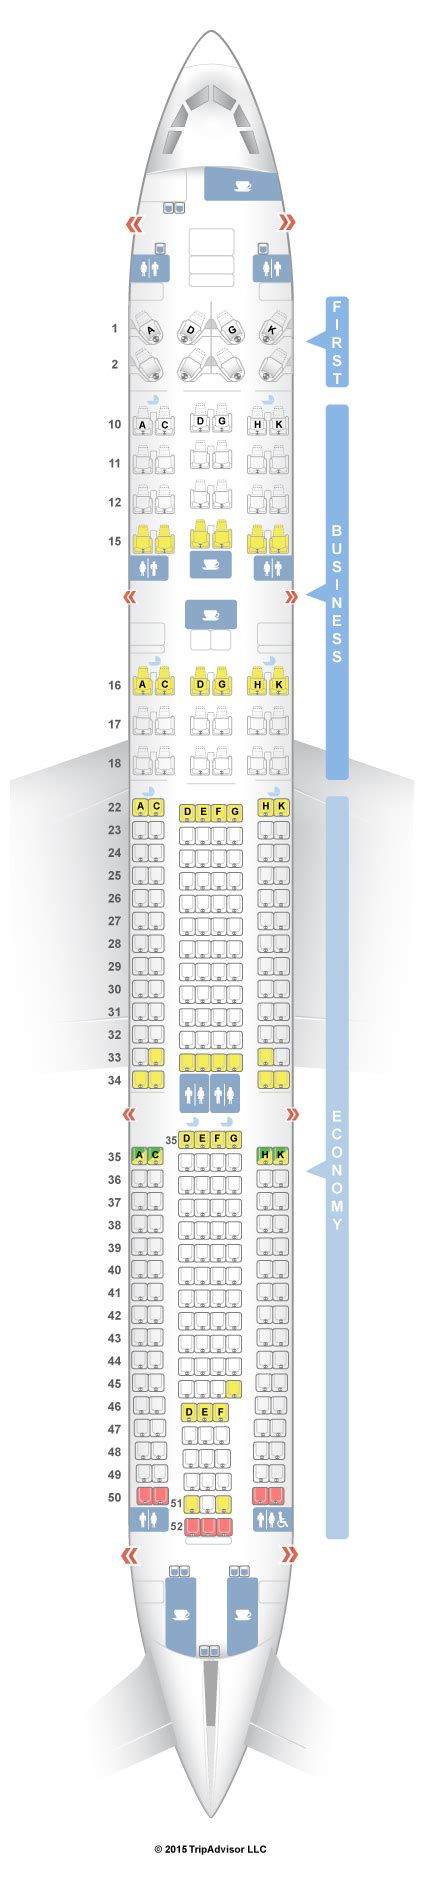 Aircraft 333 Cathay Pacific Seating Plan